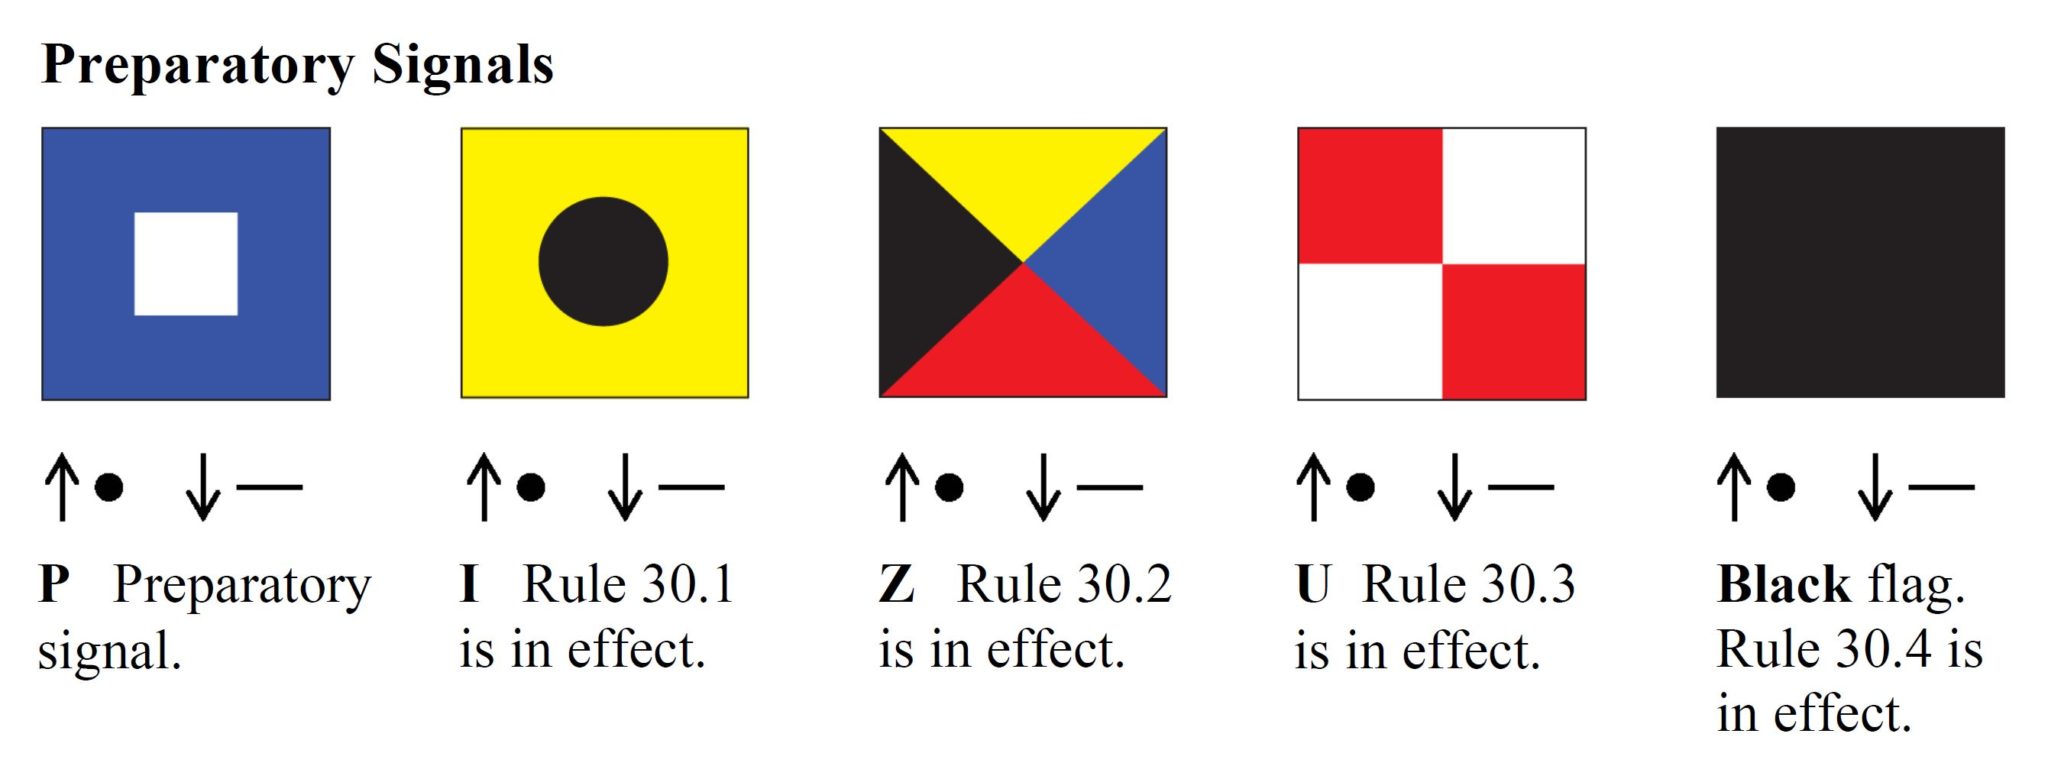 Preparatory Signals Flags